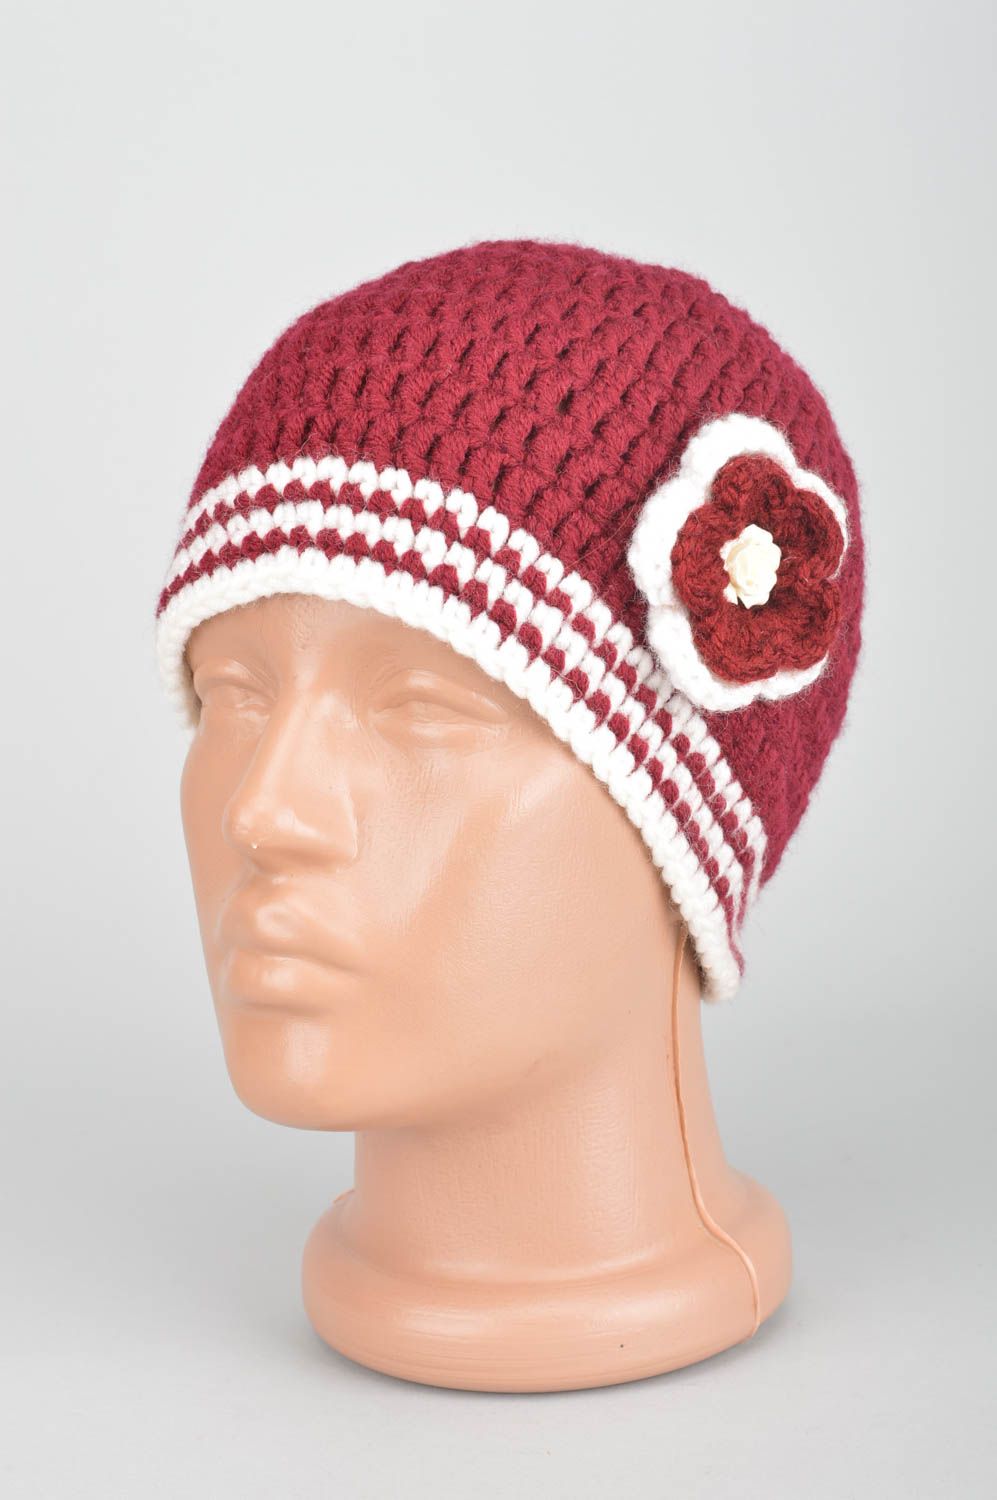 Knitted winter cap warm cap with flower children headwear accessories for kids photo 1